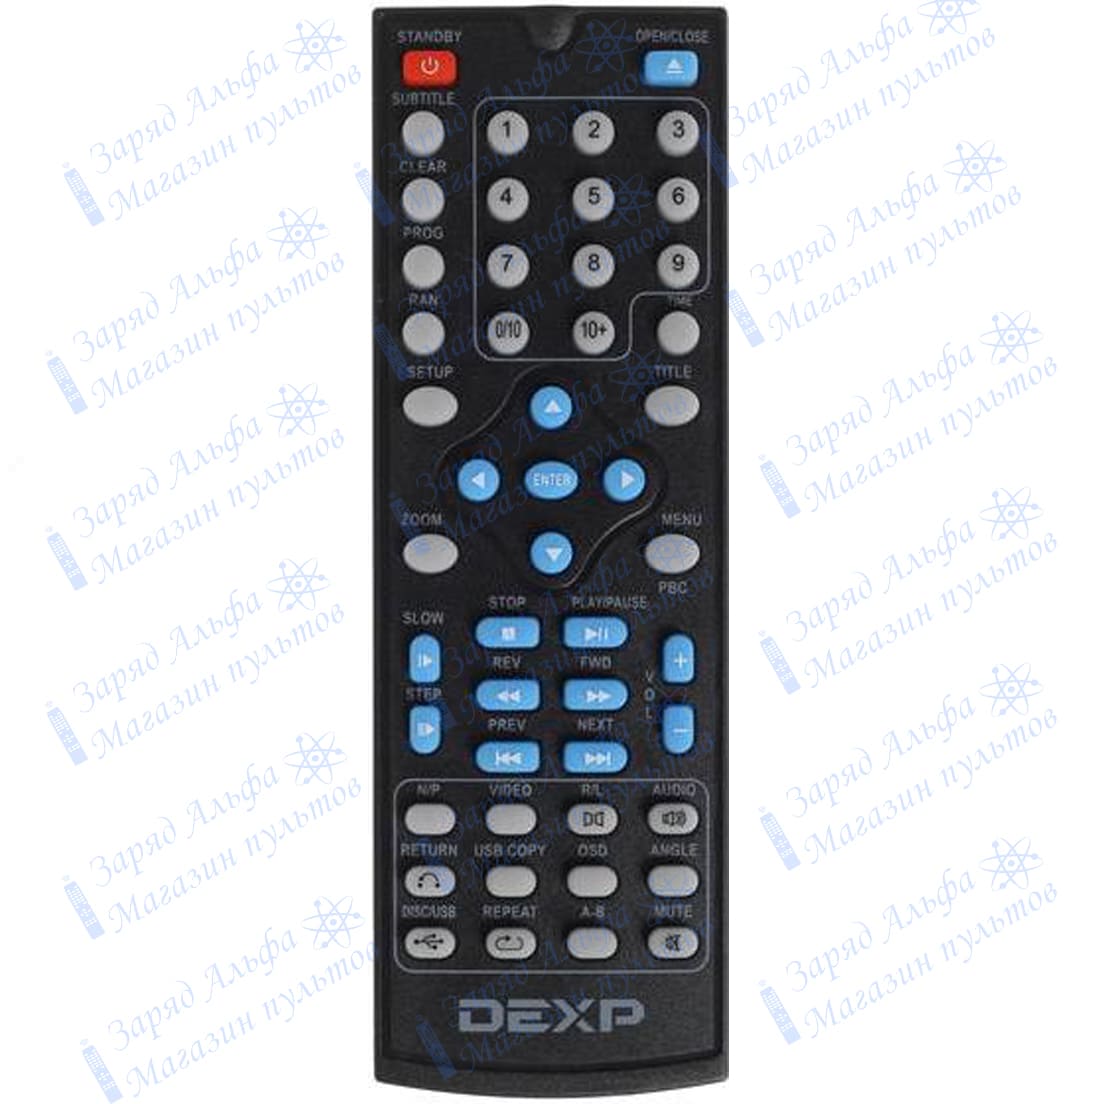 Приобрести пульт к Dexp DVD-26HMK для DVD плеера